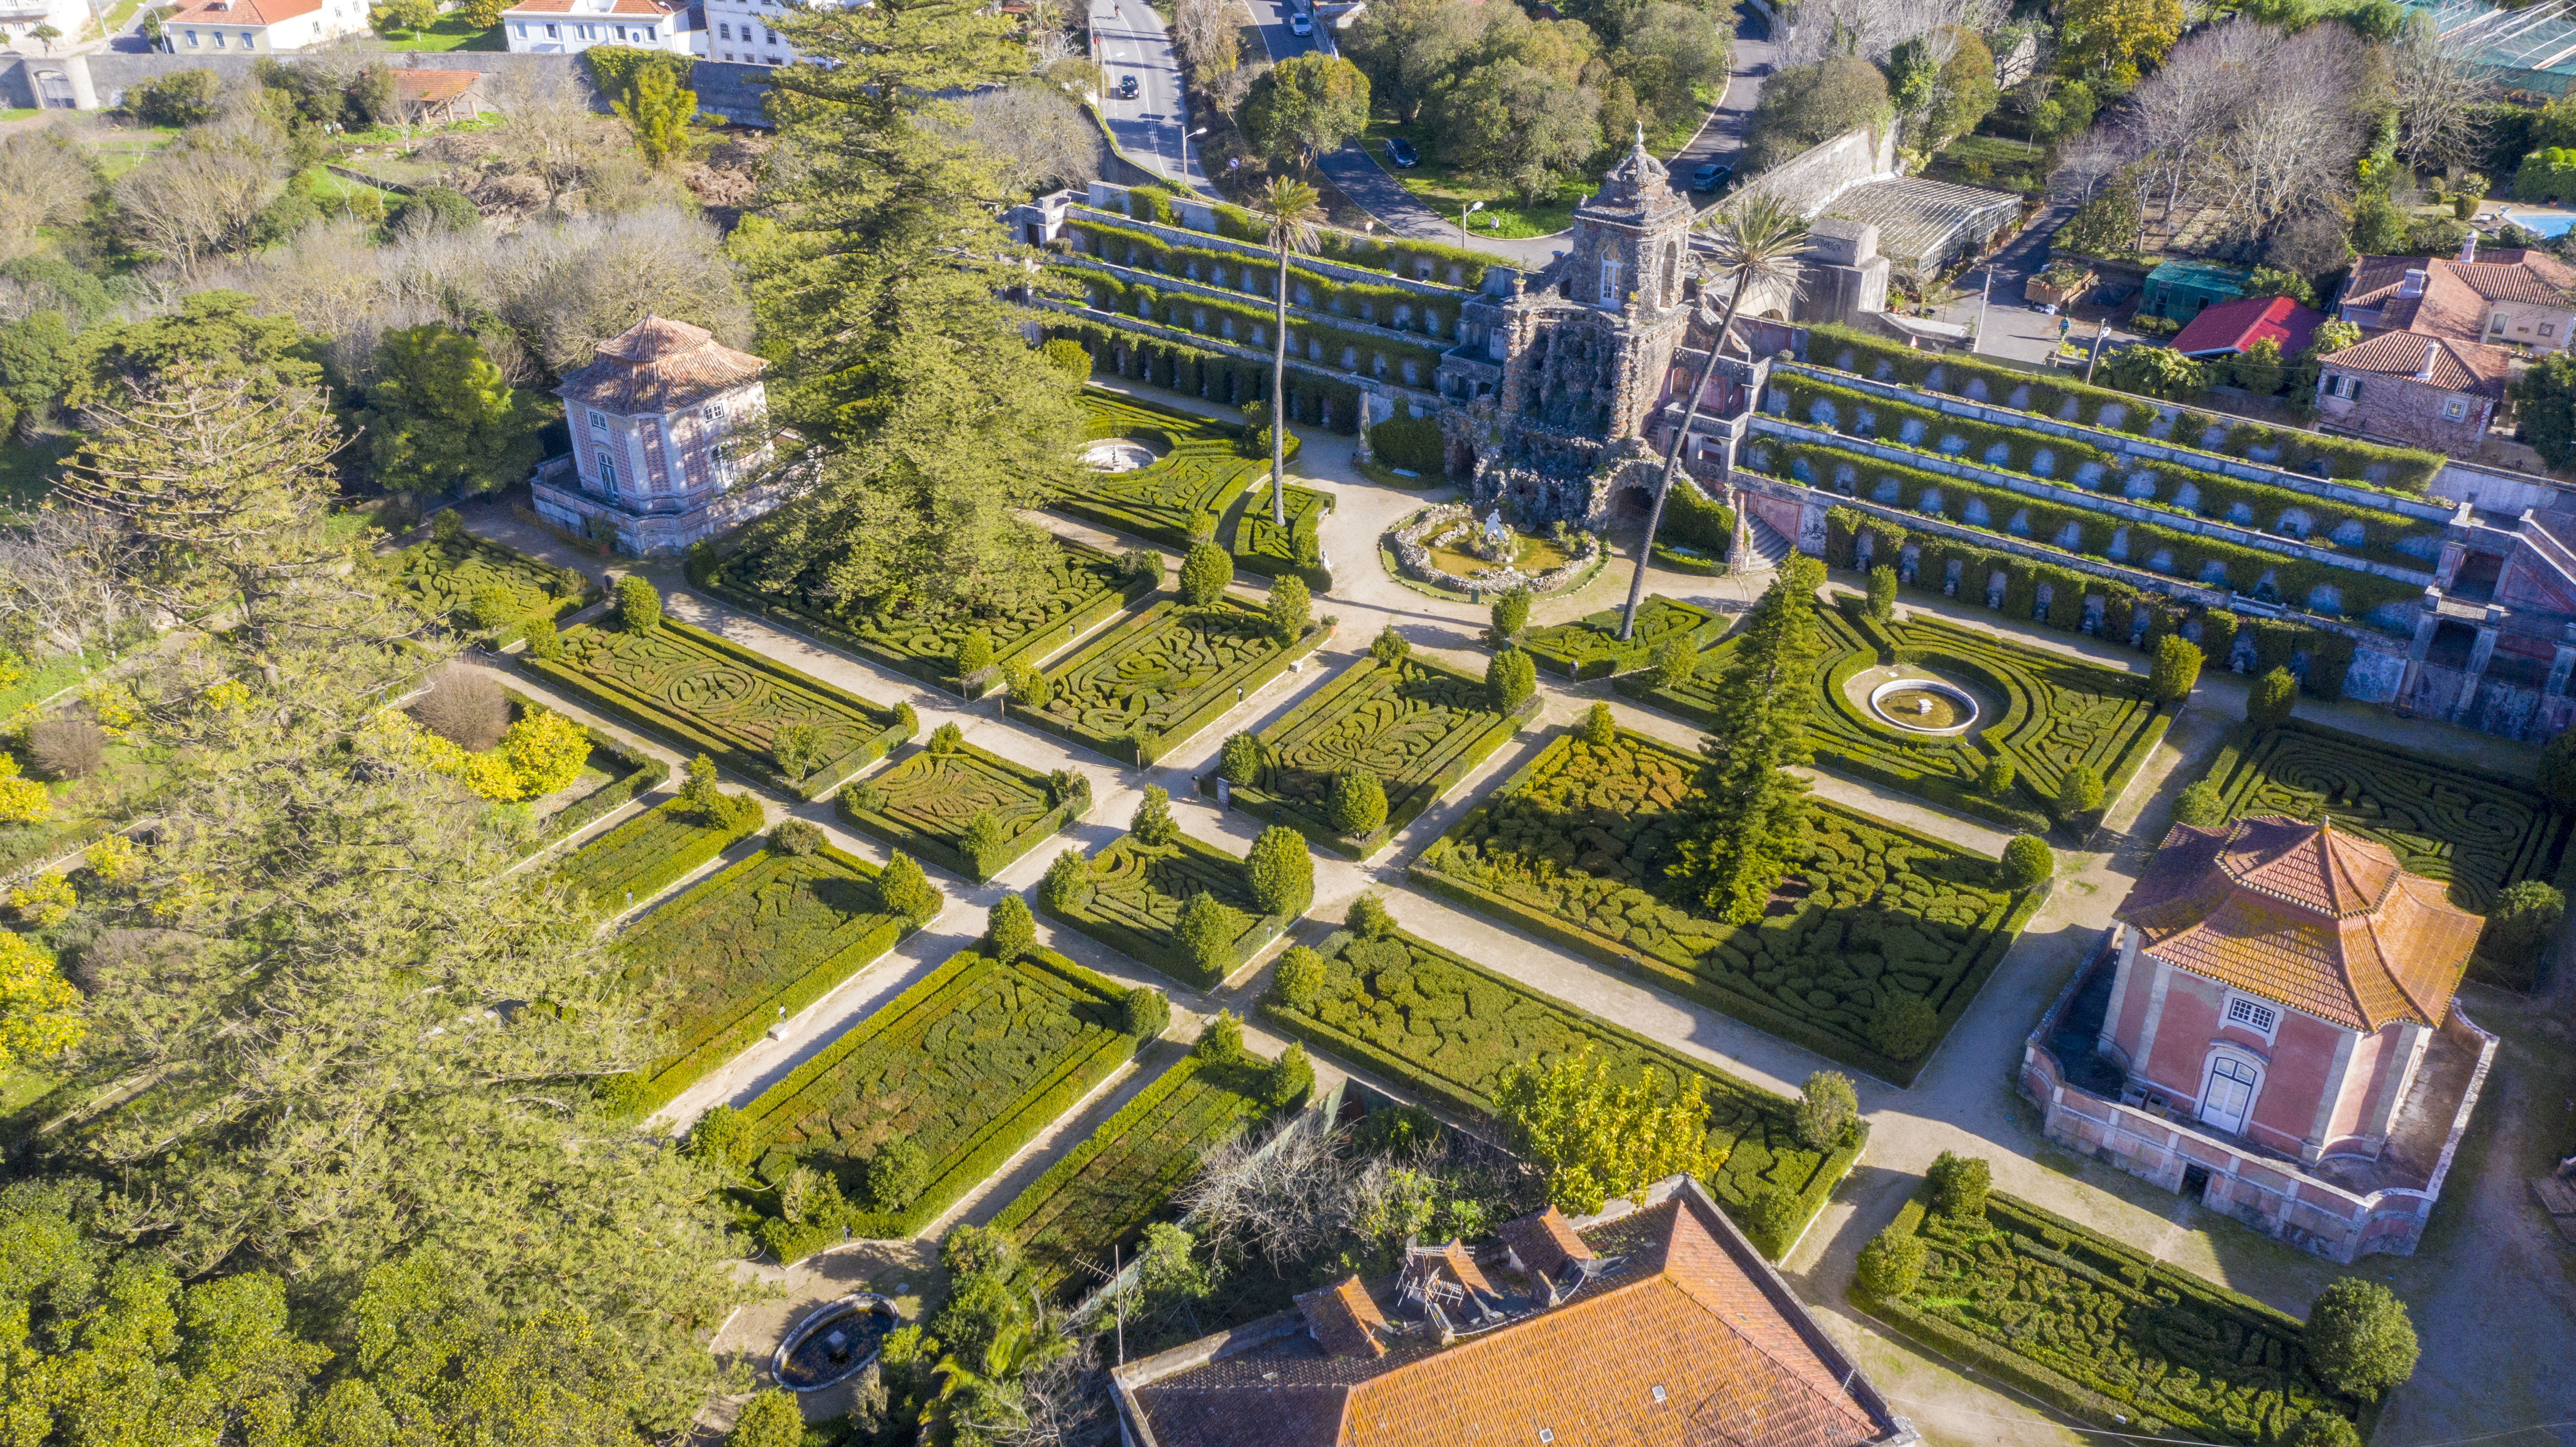  Vista aérea da Quinta Real de Caxias